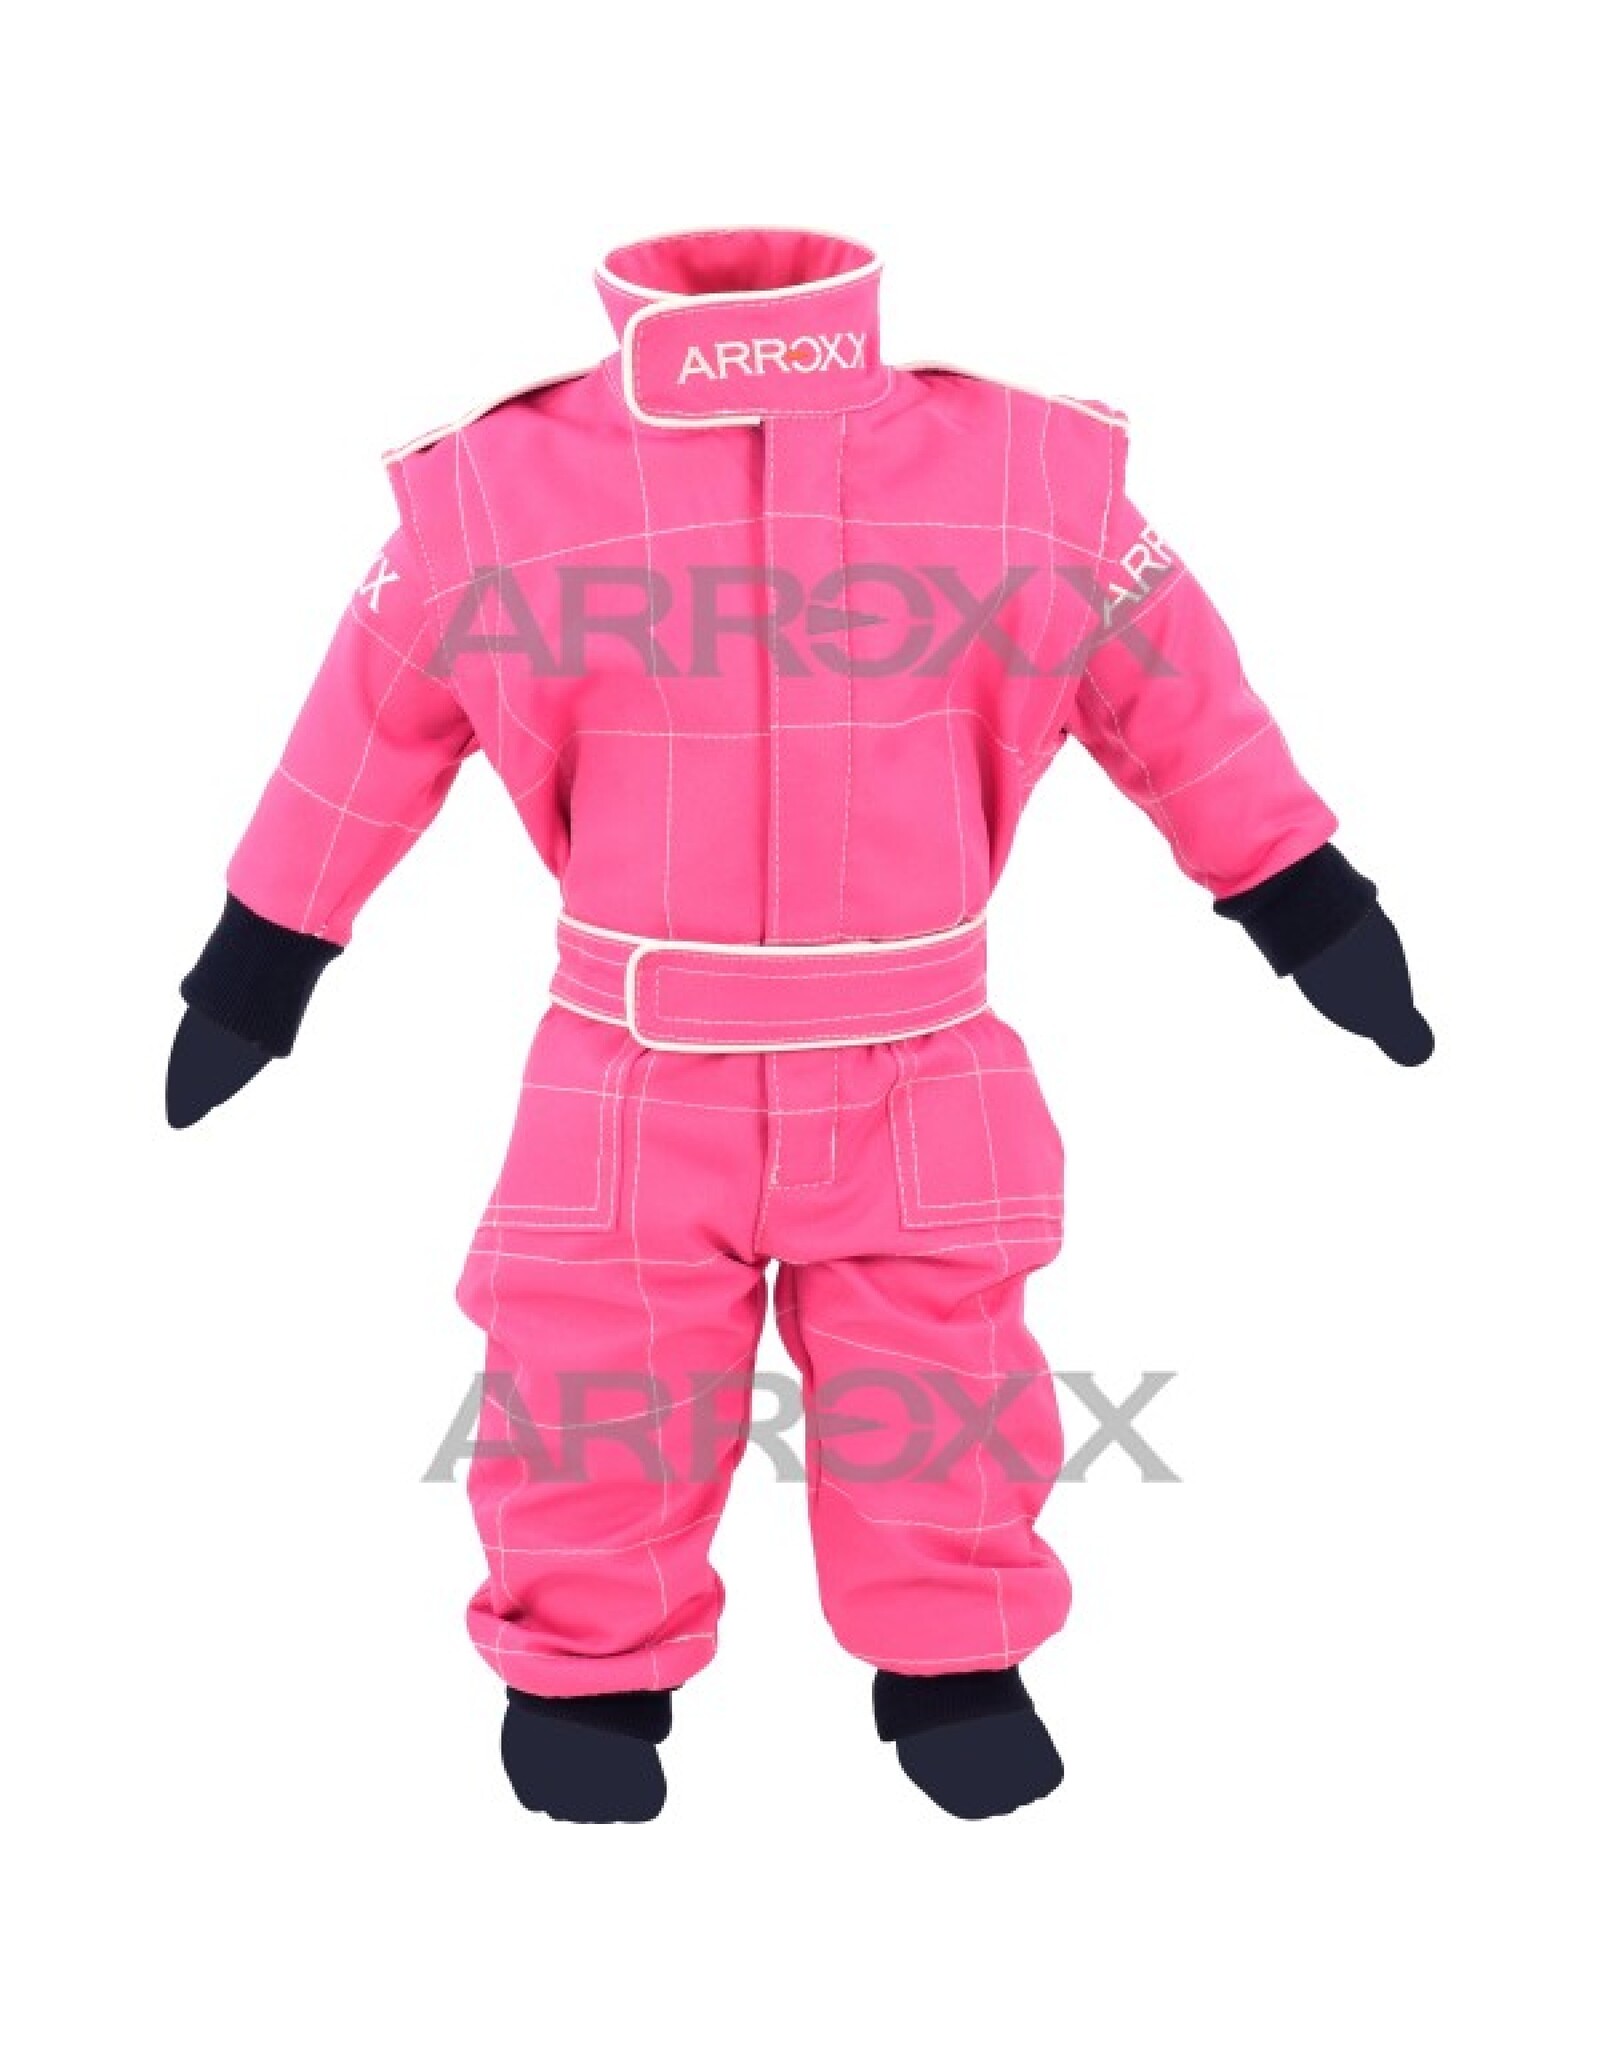 Arroxx Arroxx Baby Kart overall Pink